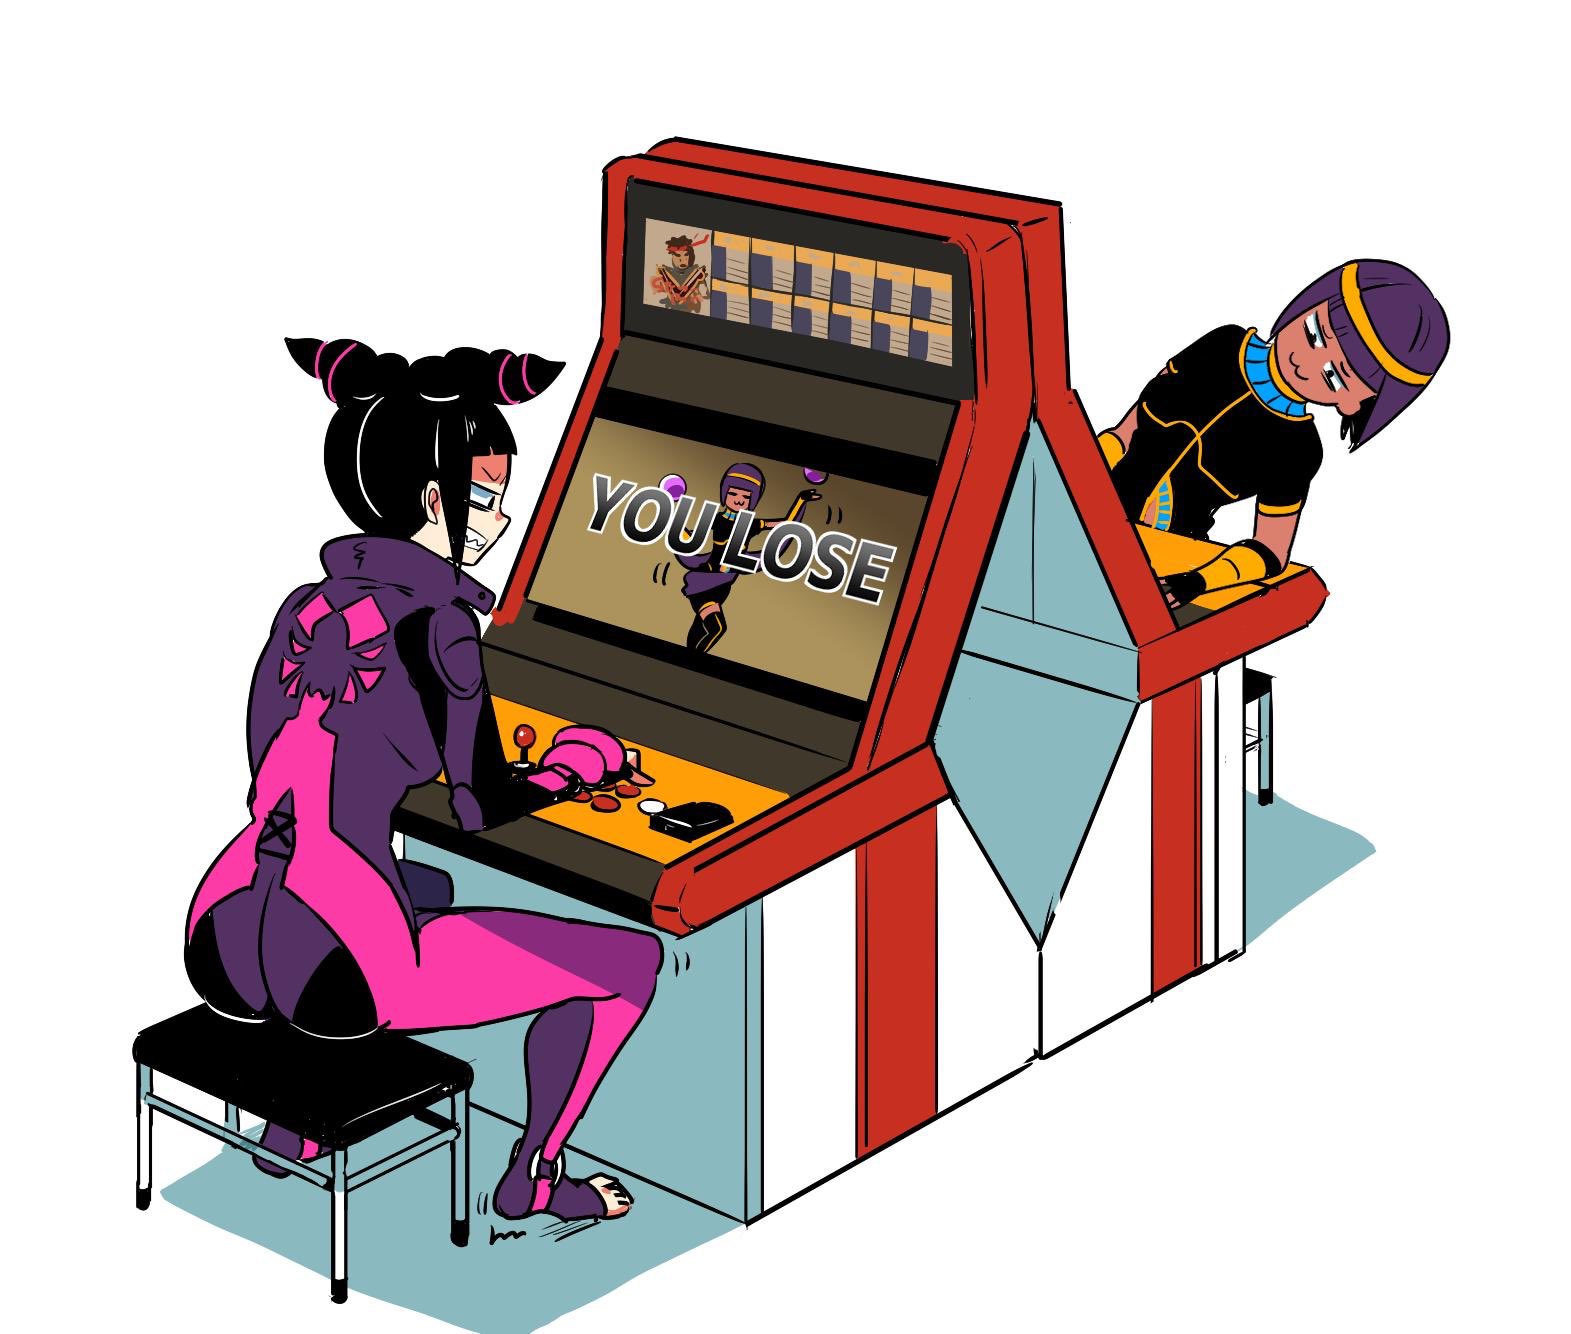 Rule 34 n. Аркада Arcade арт. Eliminator Arcade artwork. Sexp Arcade Art.